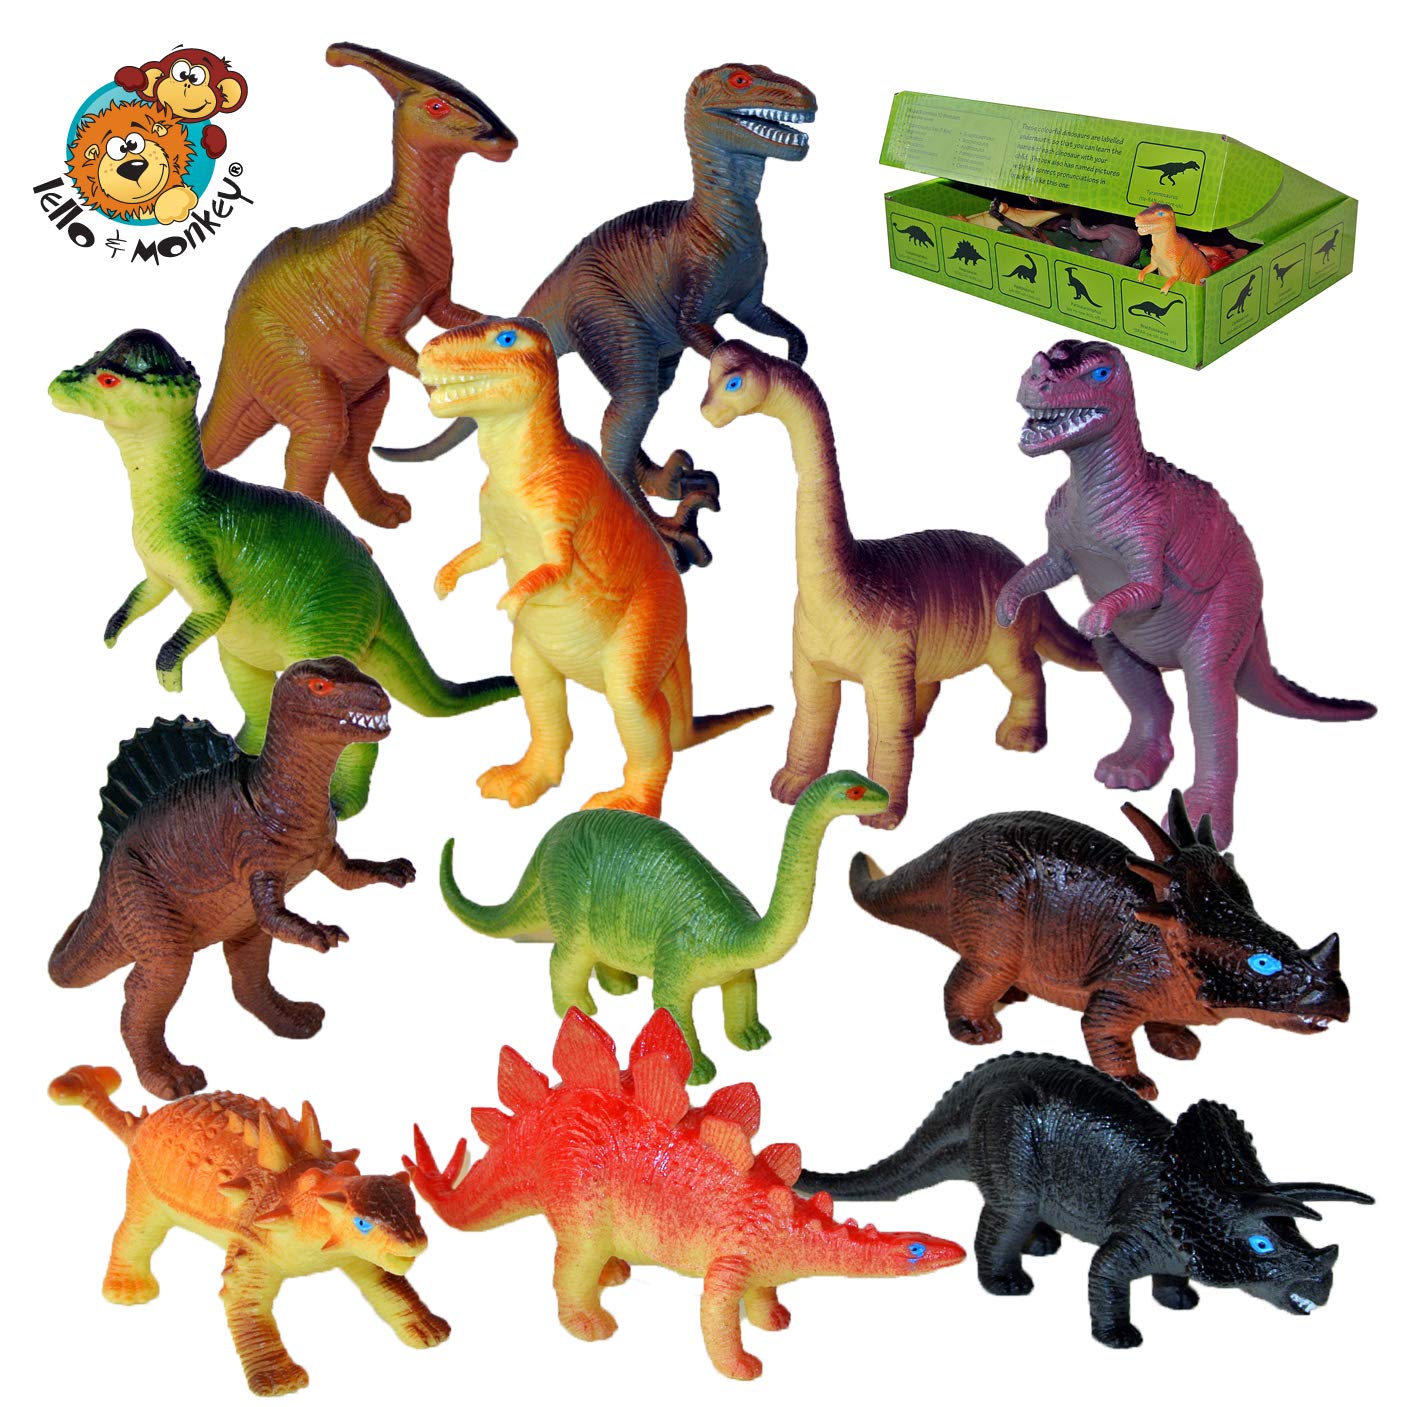 Large 7 inch dinosaur Lello & Monkey Dinosaur toys set of 12 plastic dinosaurs 